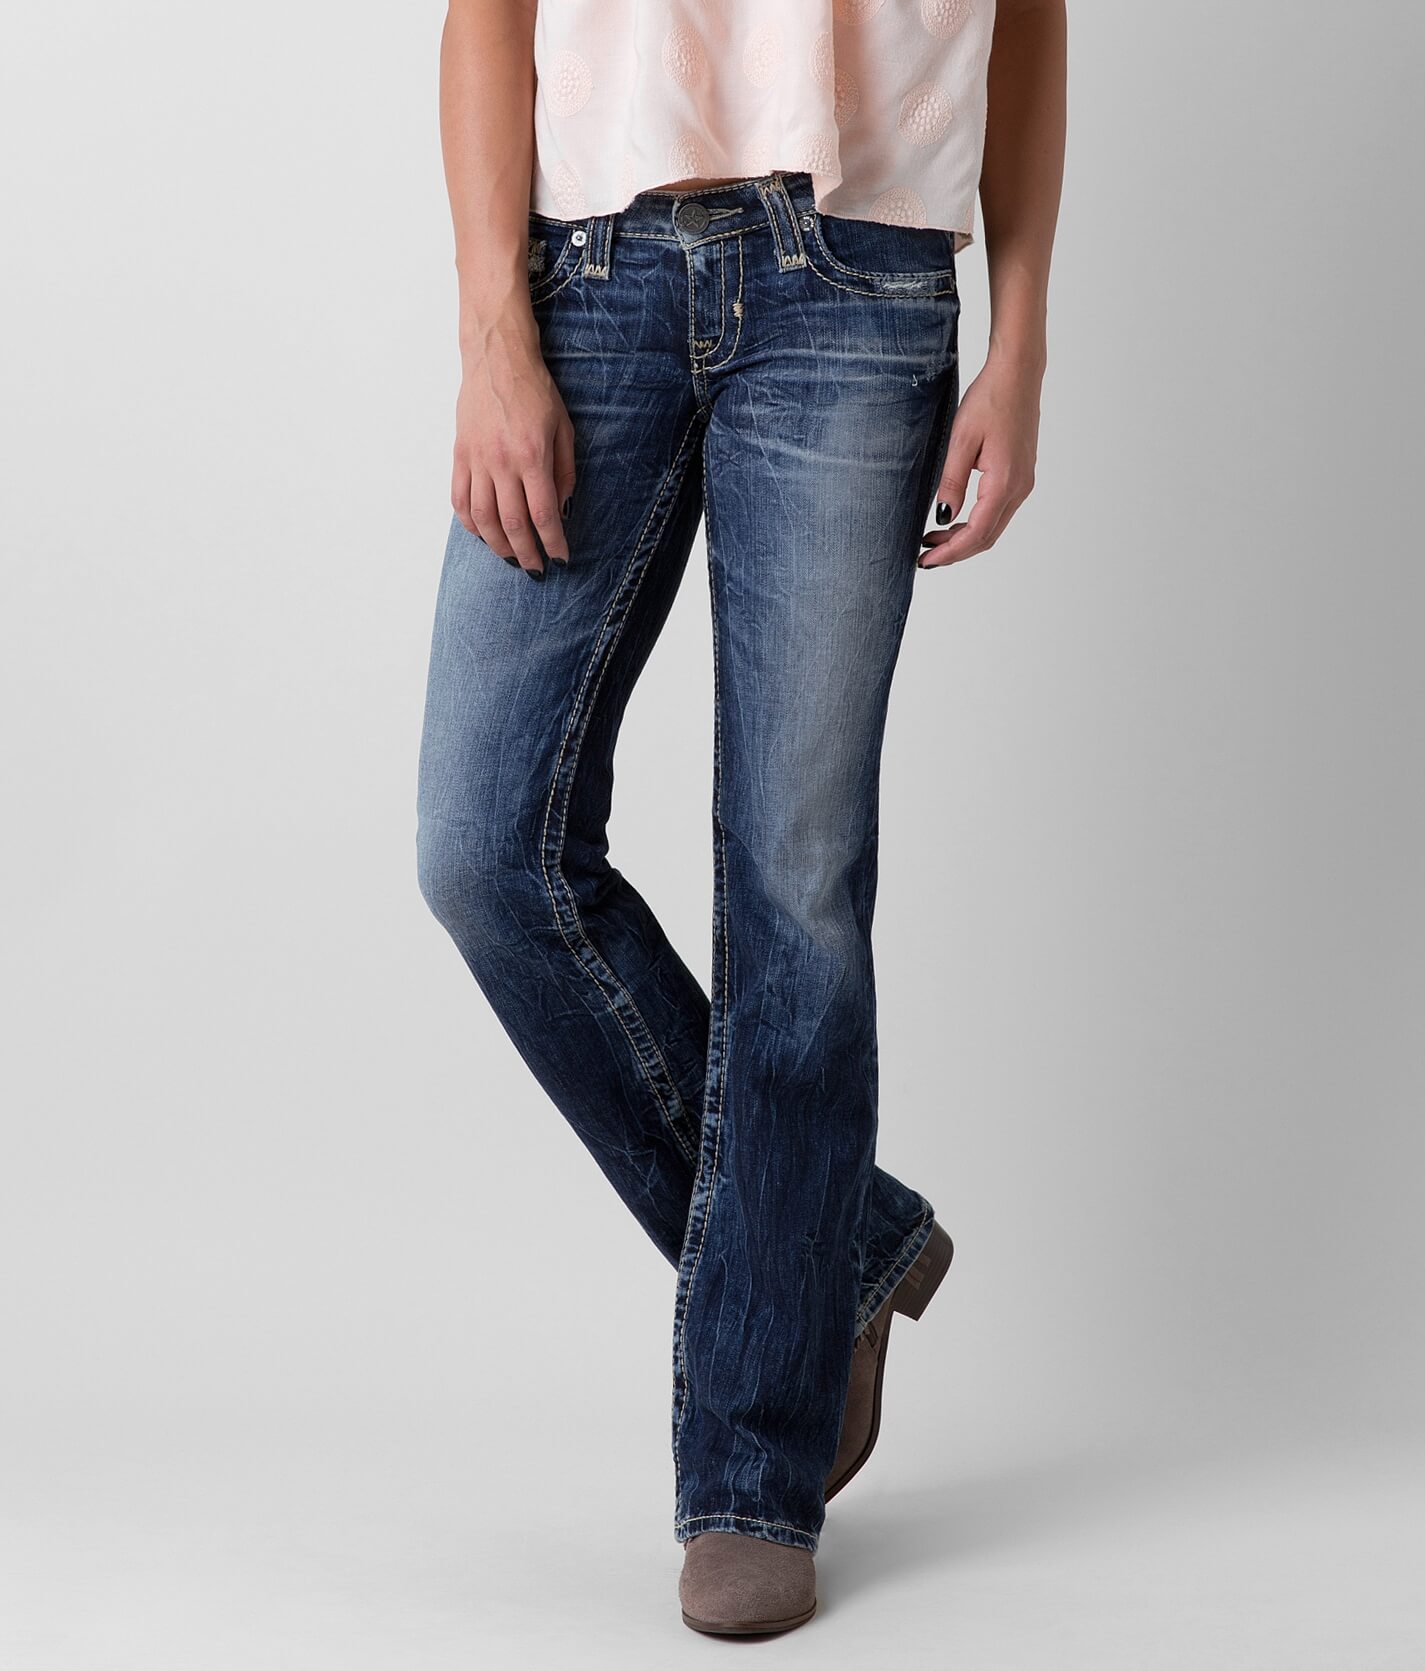 lane bryant venezia jeans